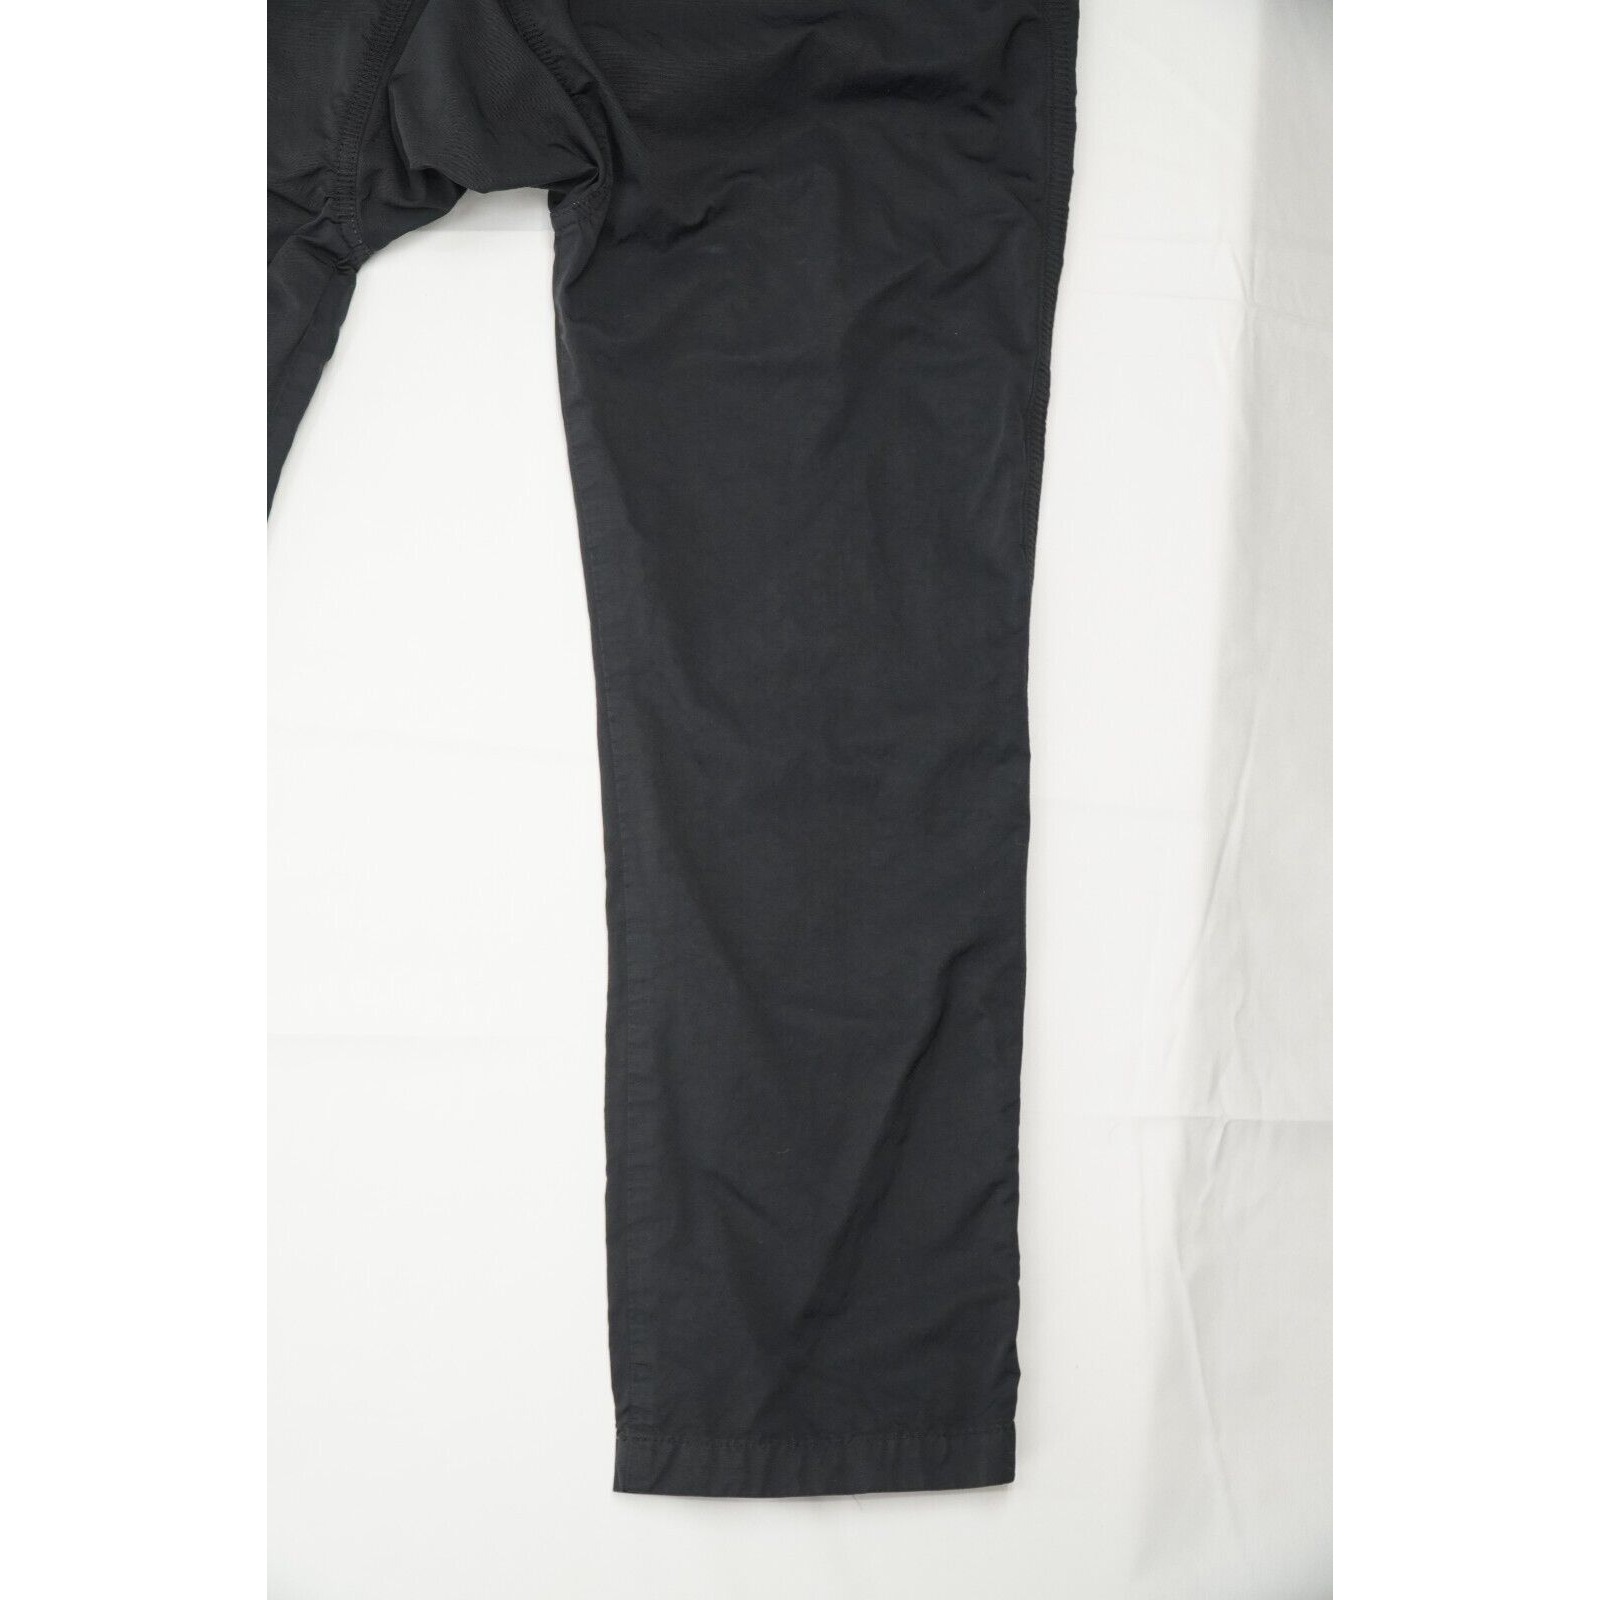 Black Lounge Pants Elastic Drawstring Drop Crotch Large - 5